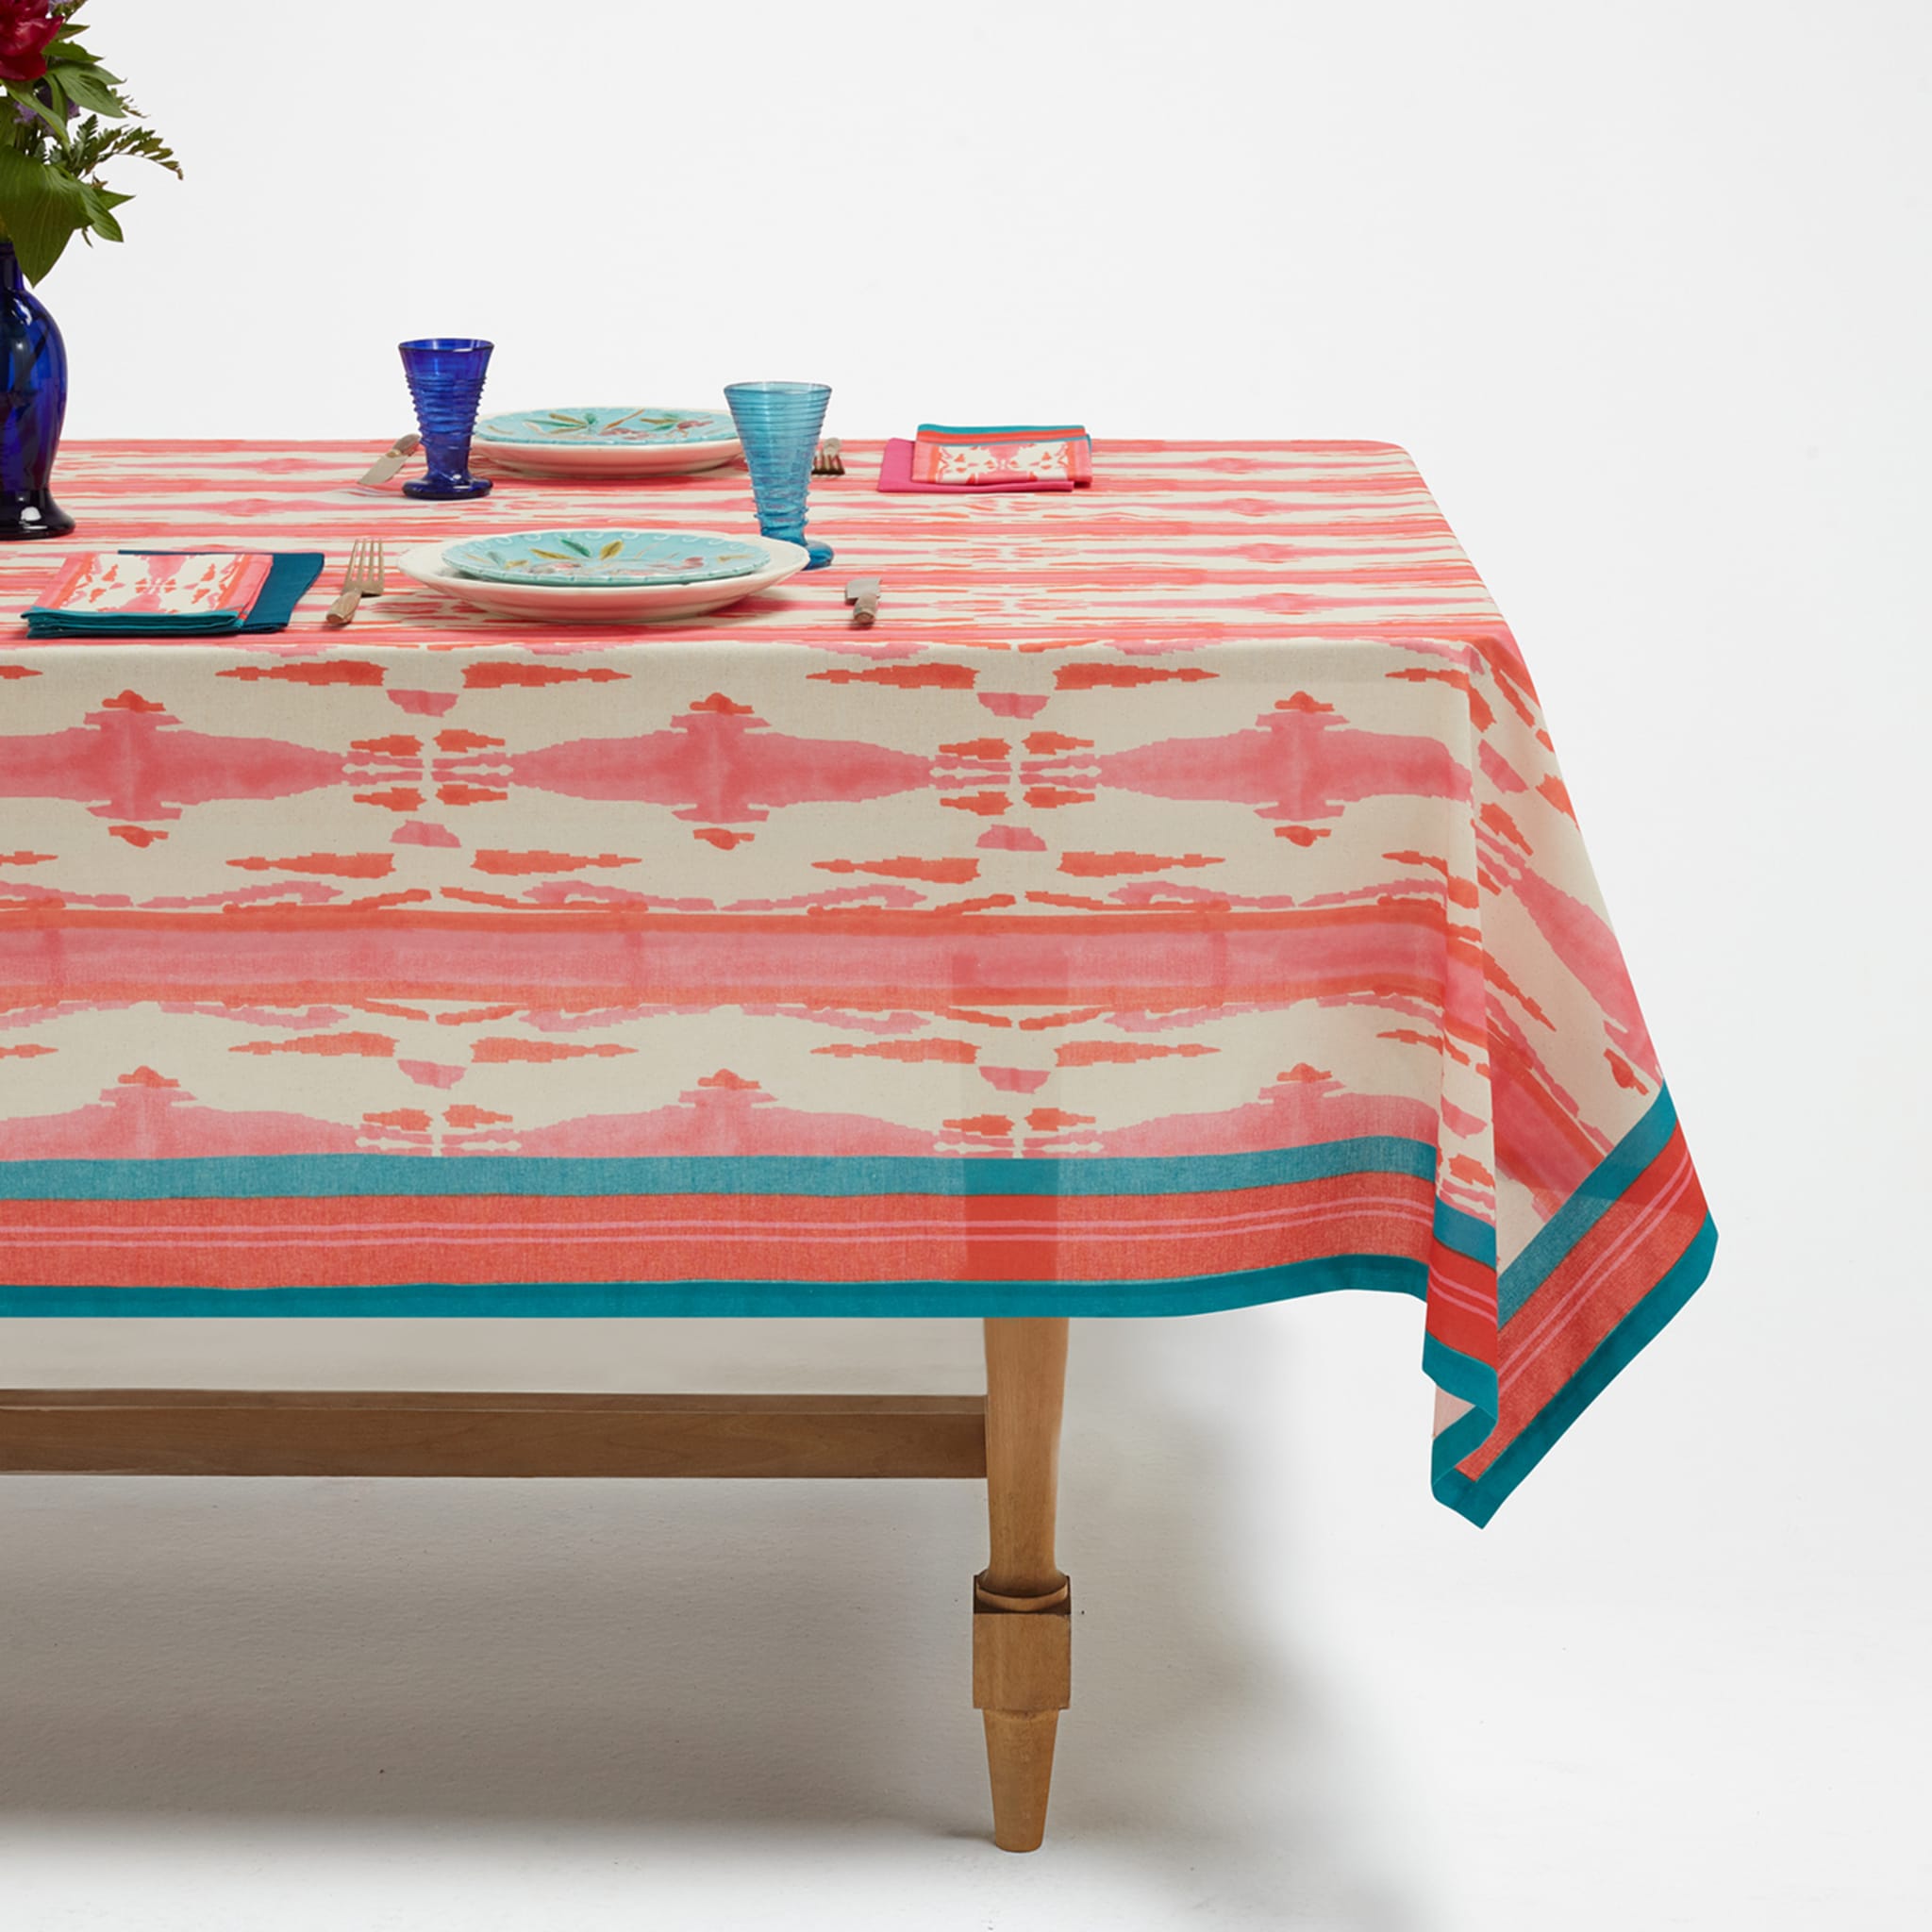 Flame Design Pink Rectangular Tablecloth  - Alternative view 2